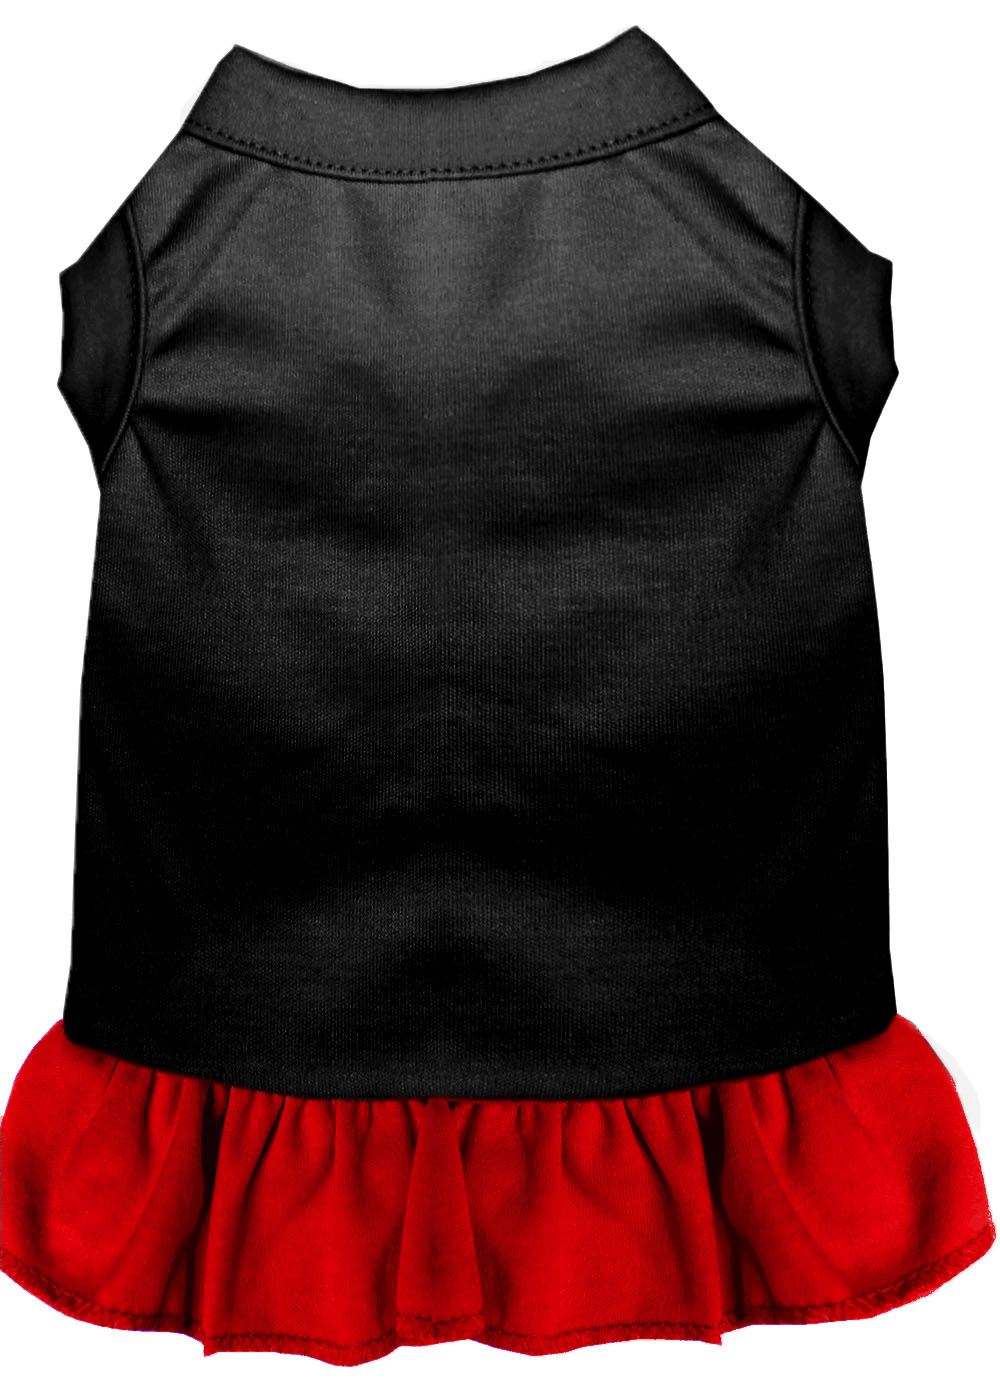 Plain Pet Dress Black with Red 4X